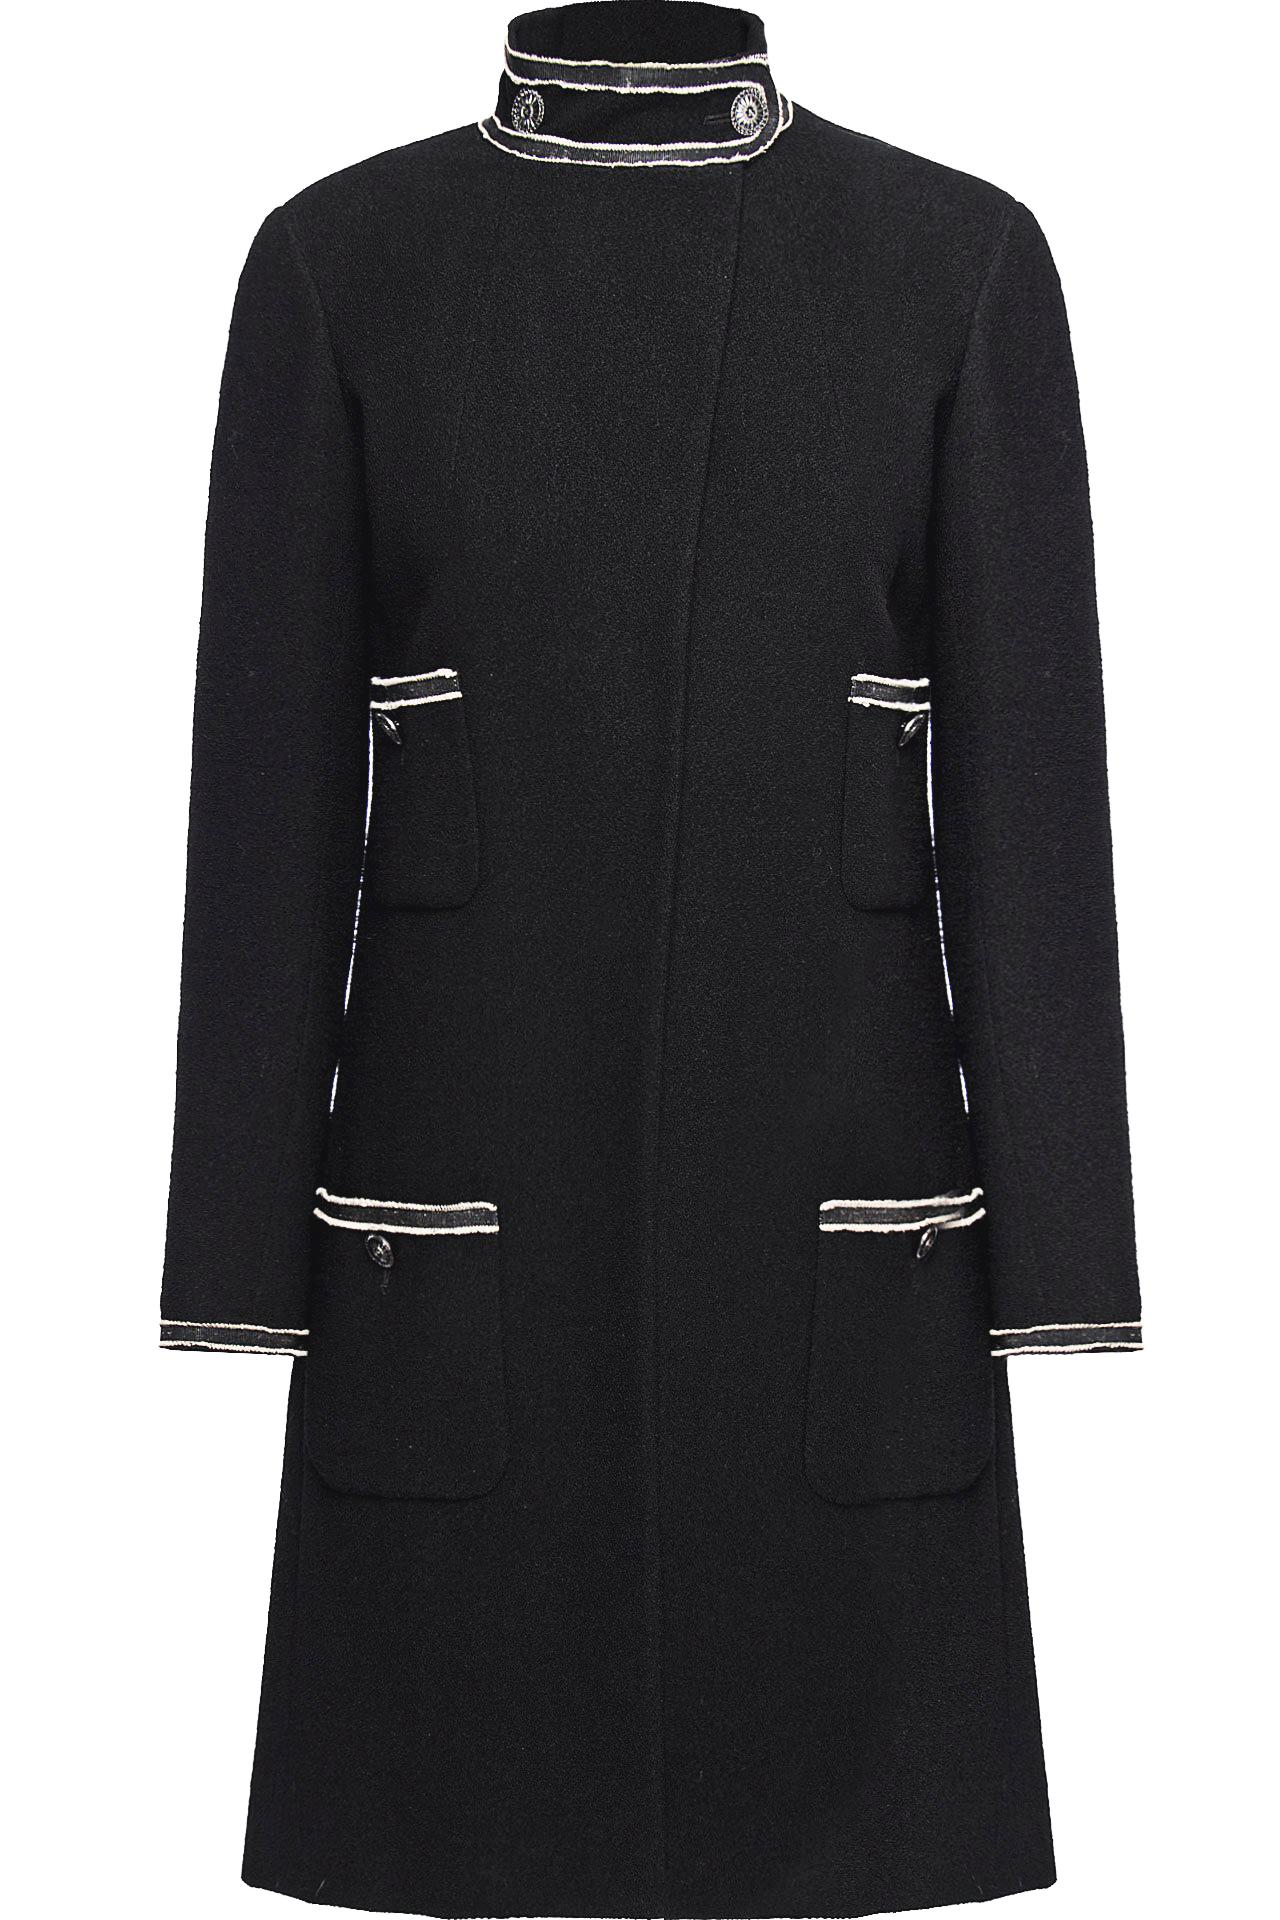 Chanel CC Buttons Paris / Singapore Runway Black Tweed Coat For Sale 4